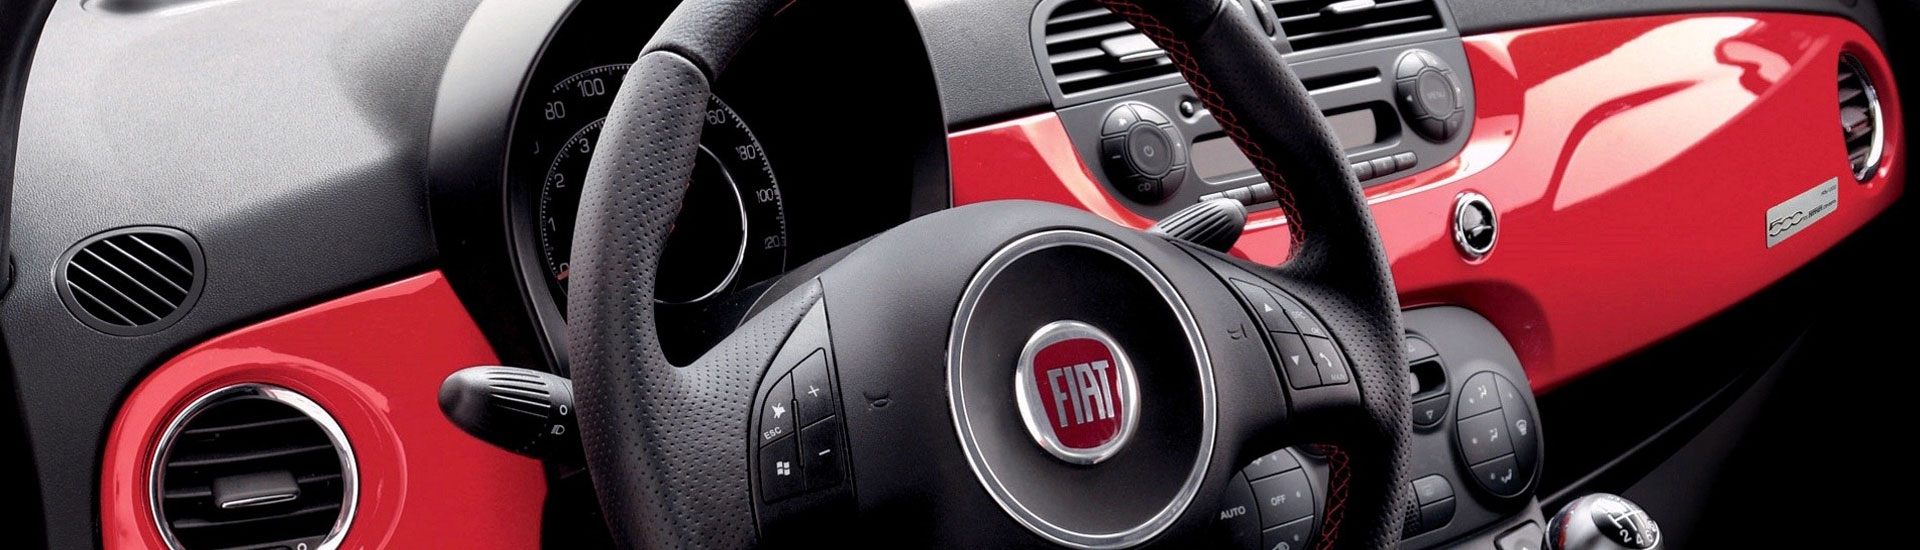 2016 Fiat 500 Abarth Custom Dash Kits